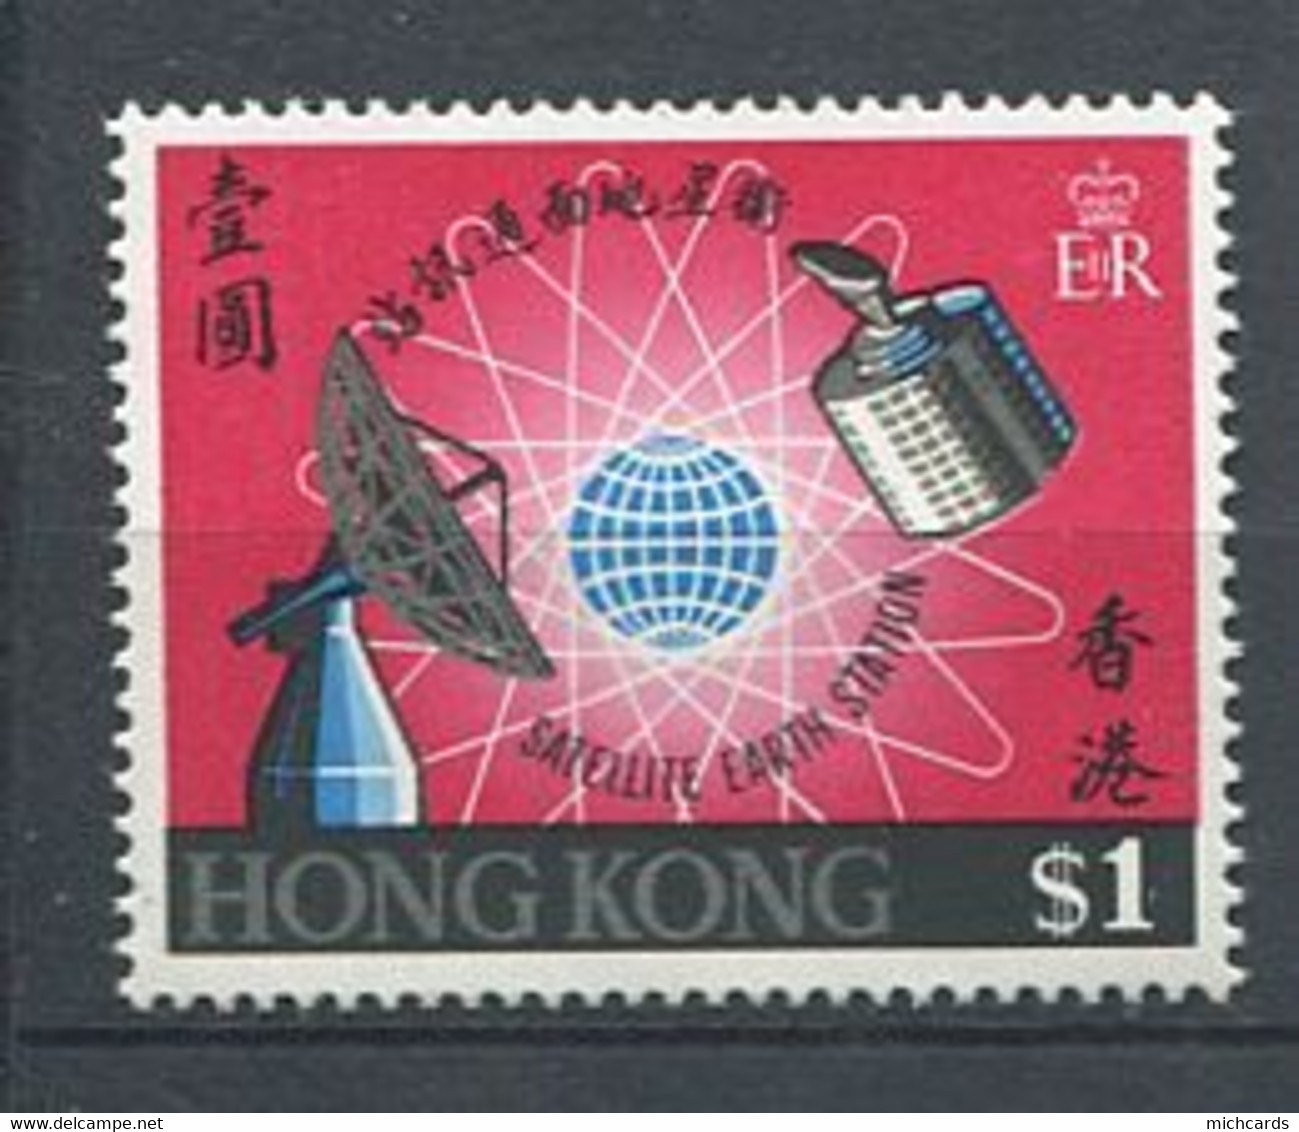 232 HONG KONG 1969 - Yvert 243 - Station Satellite Communication - Neuf ** (MNH) Sans Trace De Charniere - Nuevos